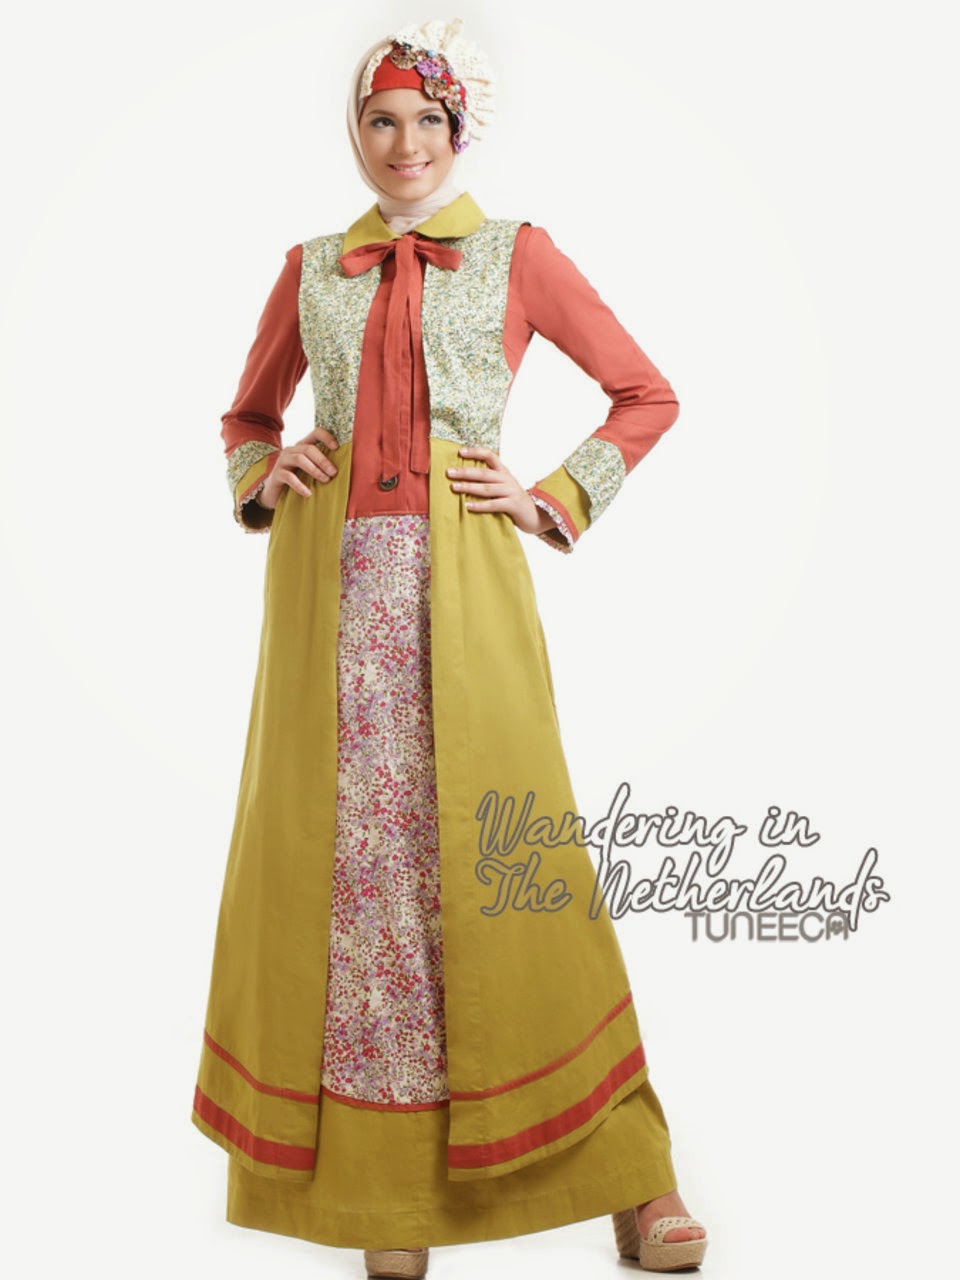 12 Contoh Model Gamis Muslim Lebaran Terbaru Kumpulan Model Baju